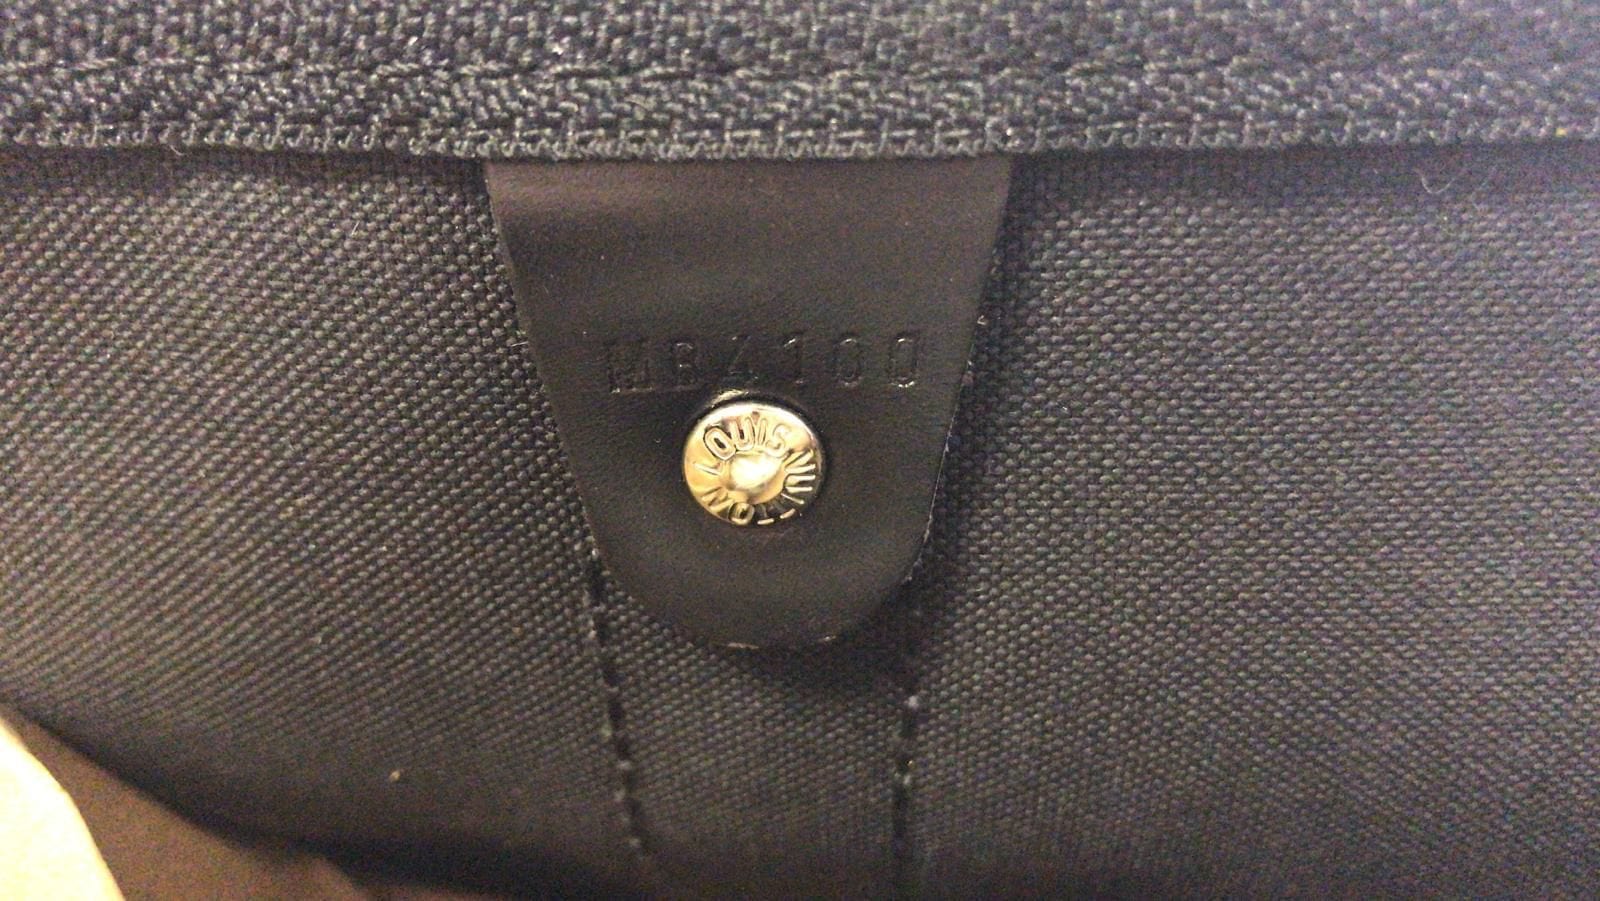 Louis Vuitton Keepall 45 Damier Graphite Travel Bag